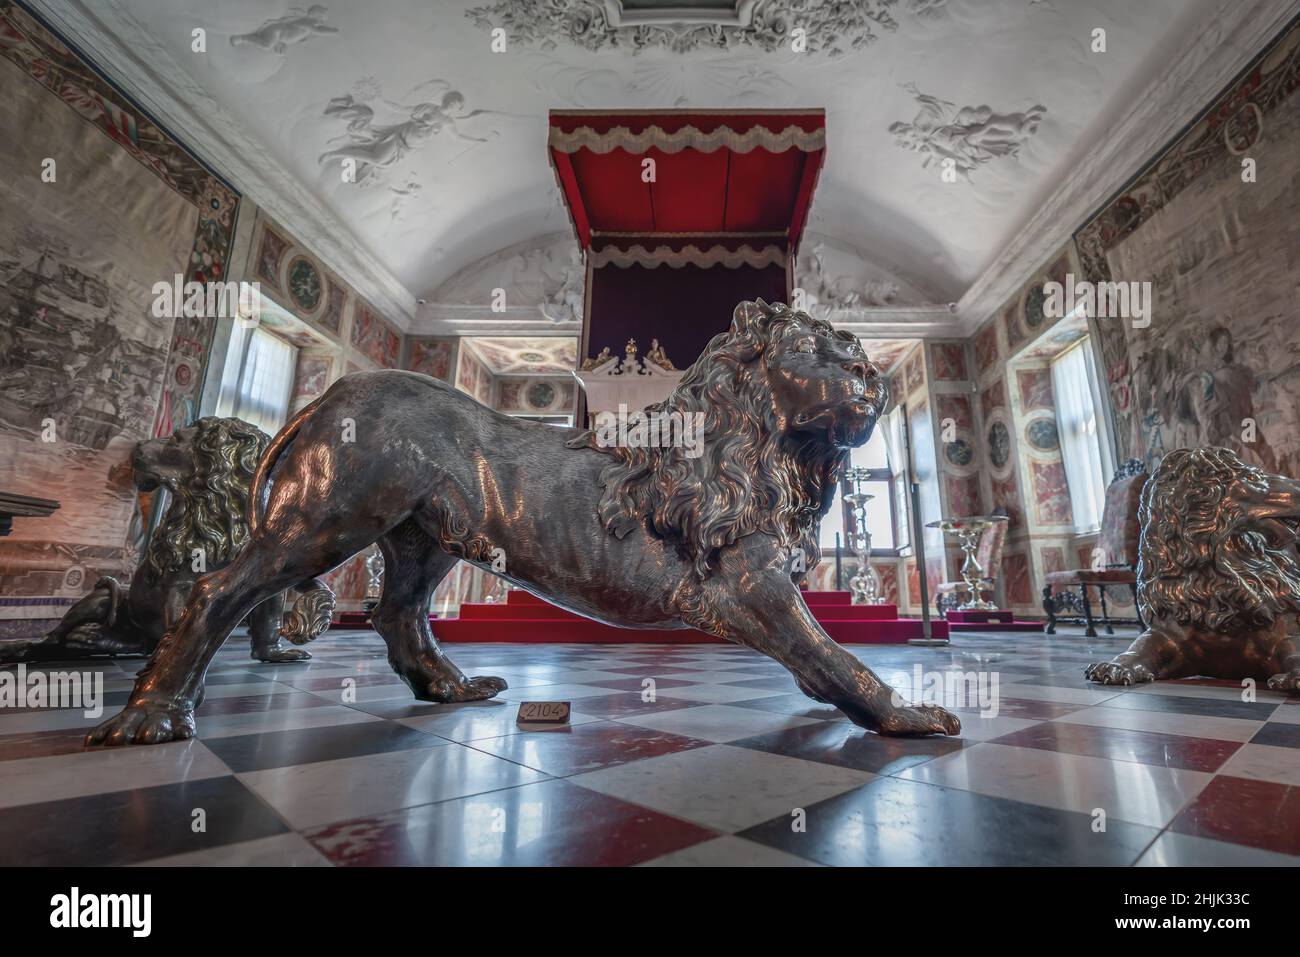 Silberner Löwe in der Ritterhalle auf Schloss Rosenborg - Kopenhagen, Dänemark Stockfoto